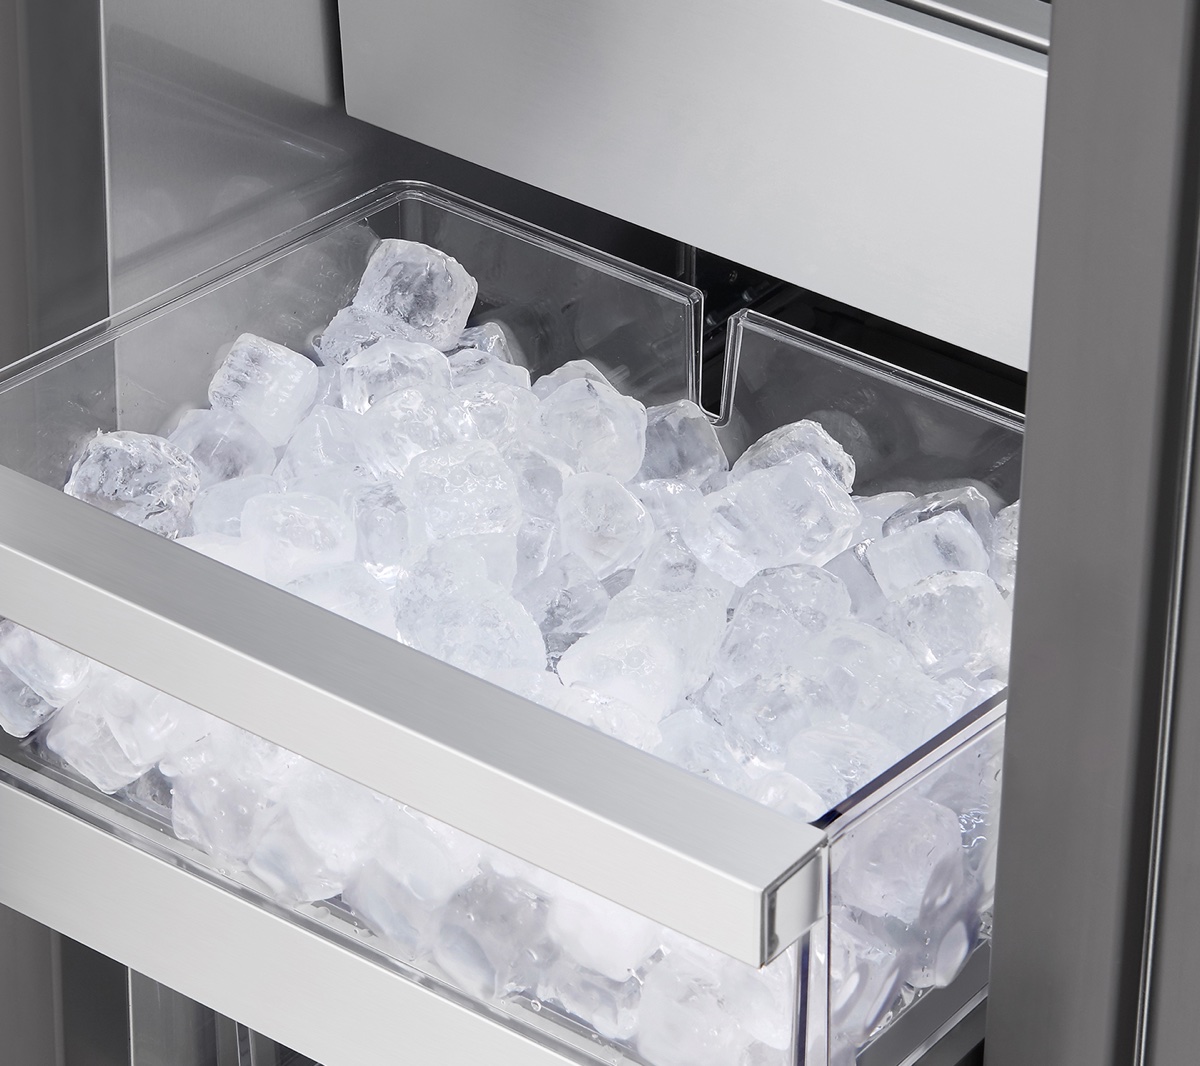 10 Best Ice Maker For Freezer for 2023